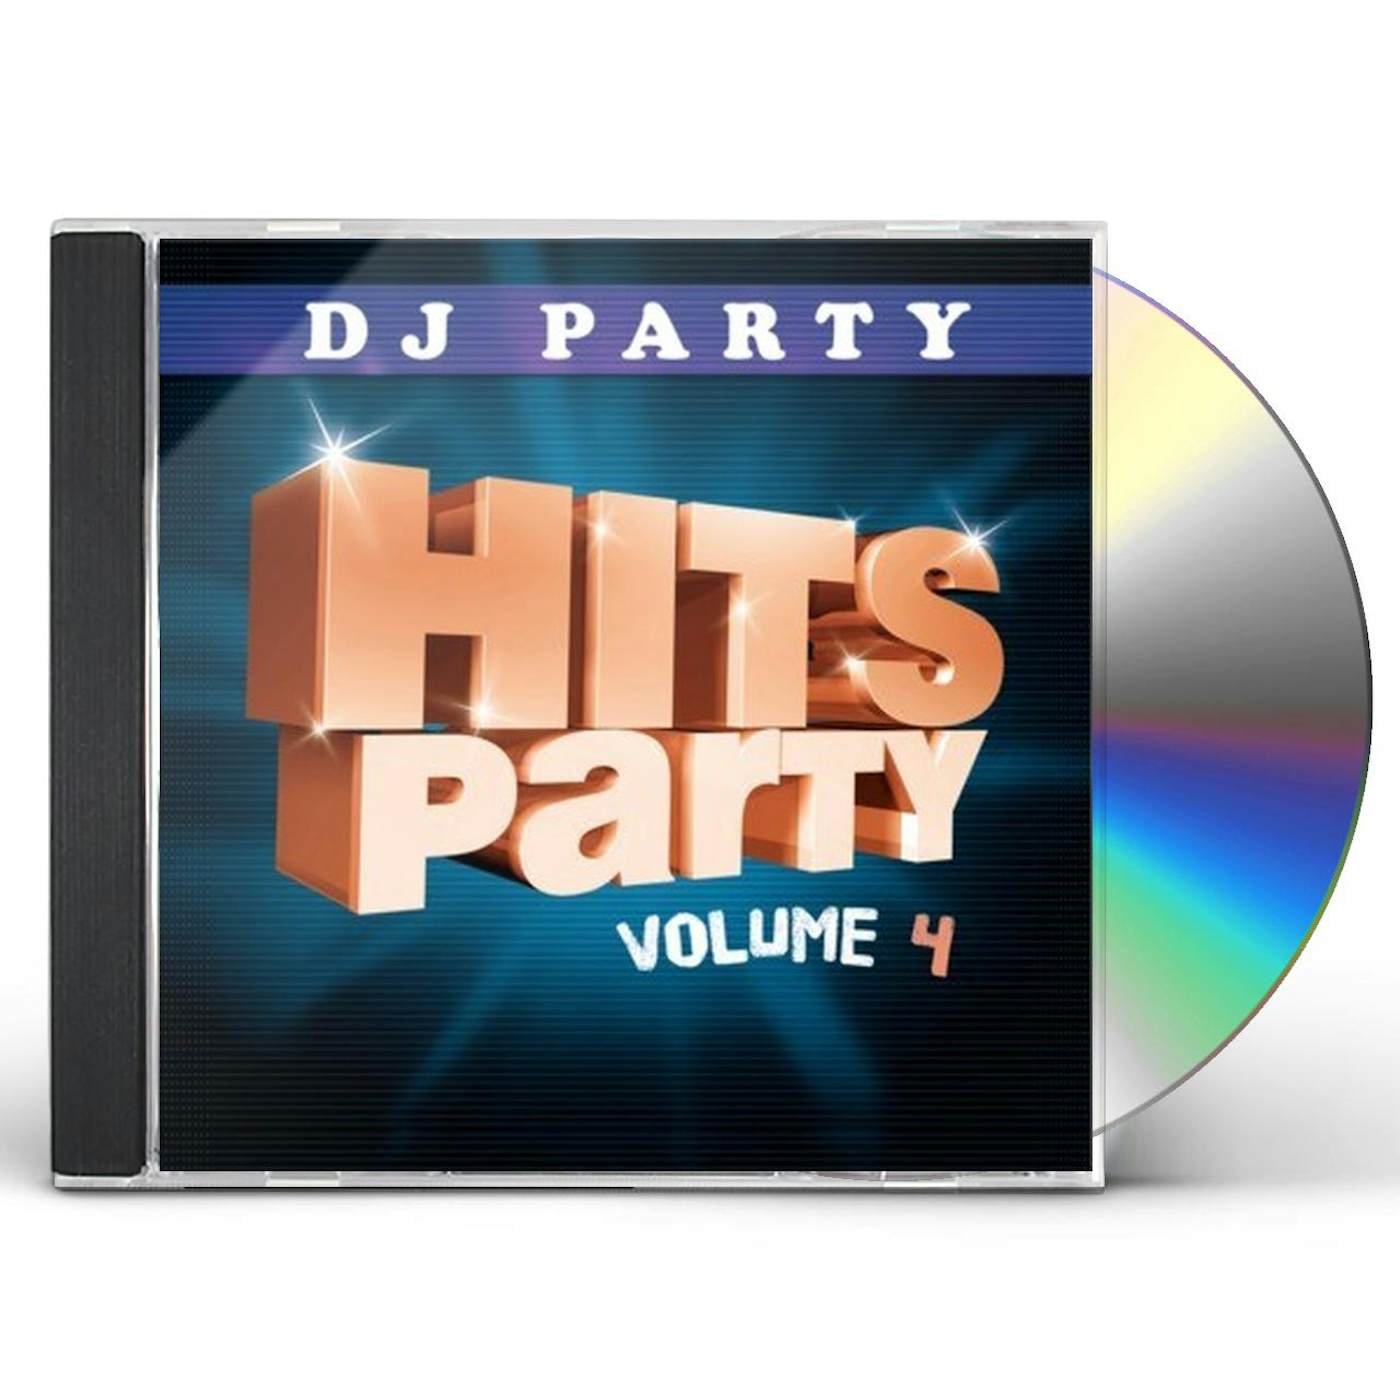 DJ Party HITS PARTY VOL. 4 CD